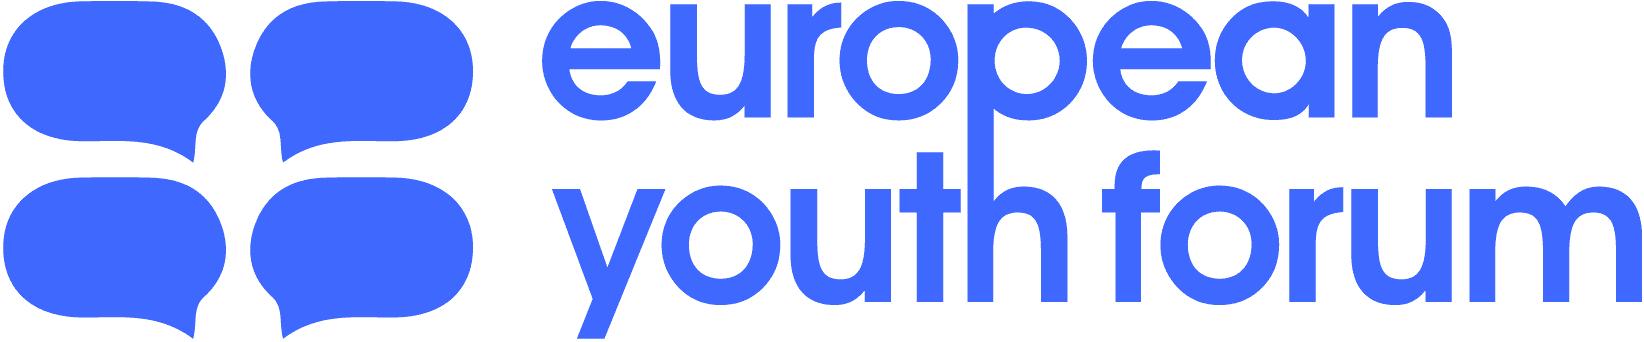 European Youth Forum